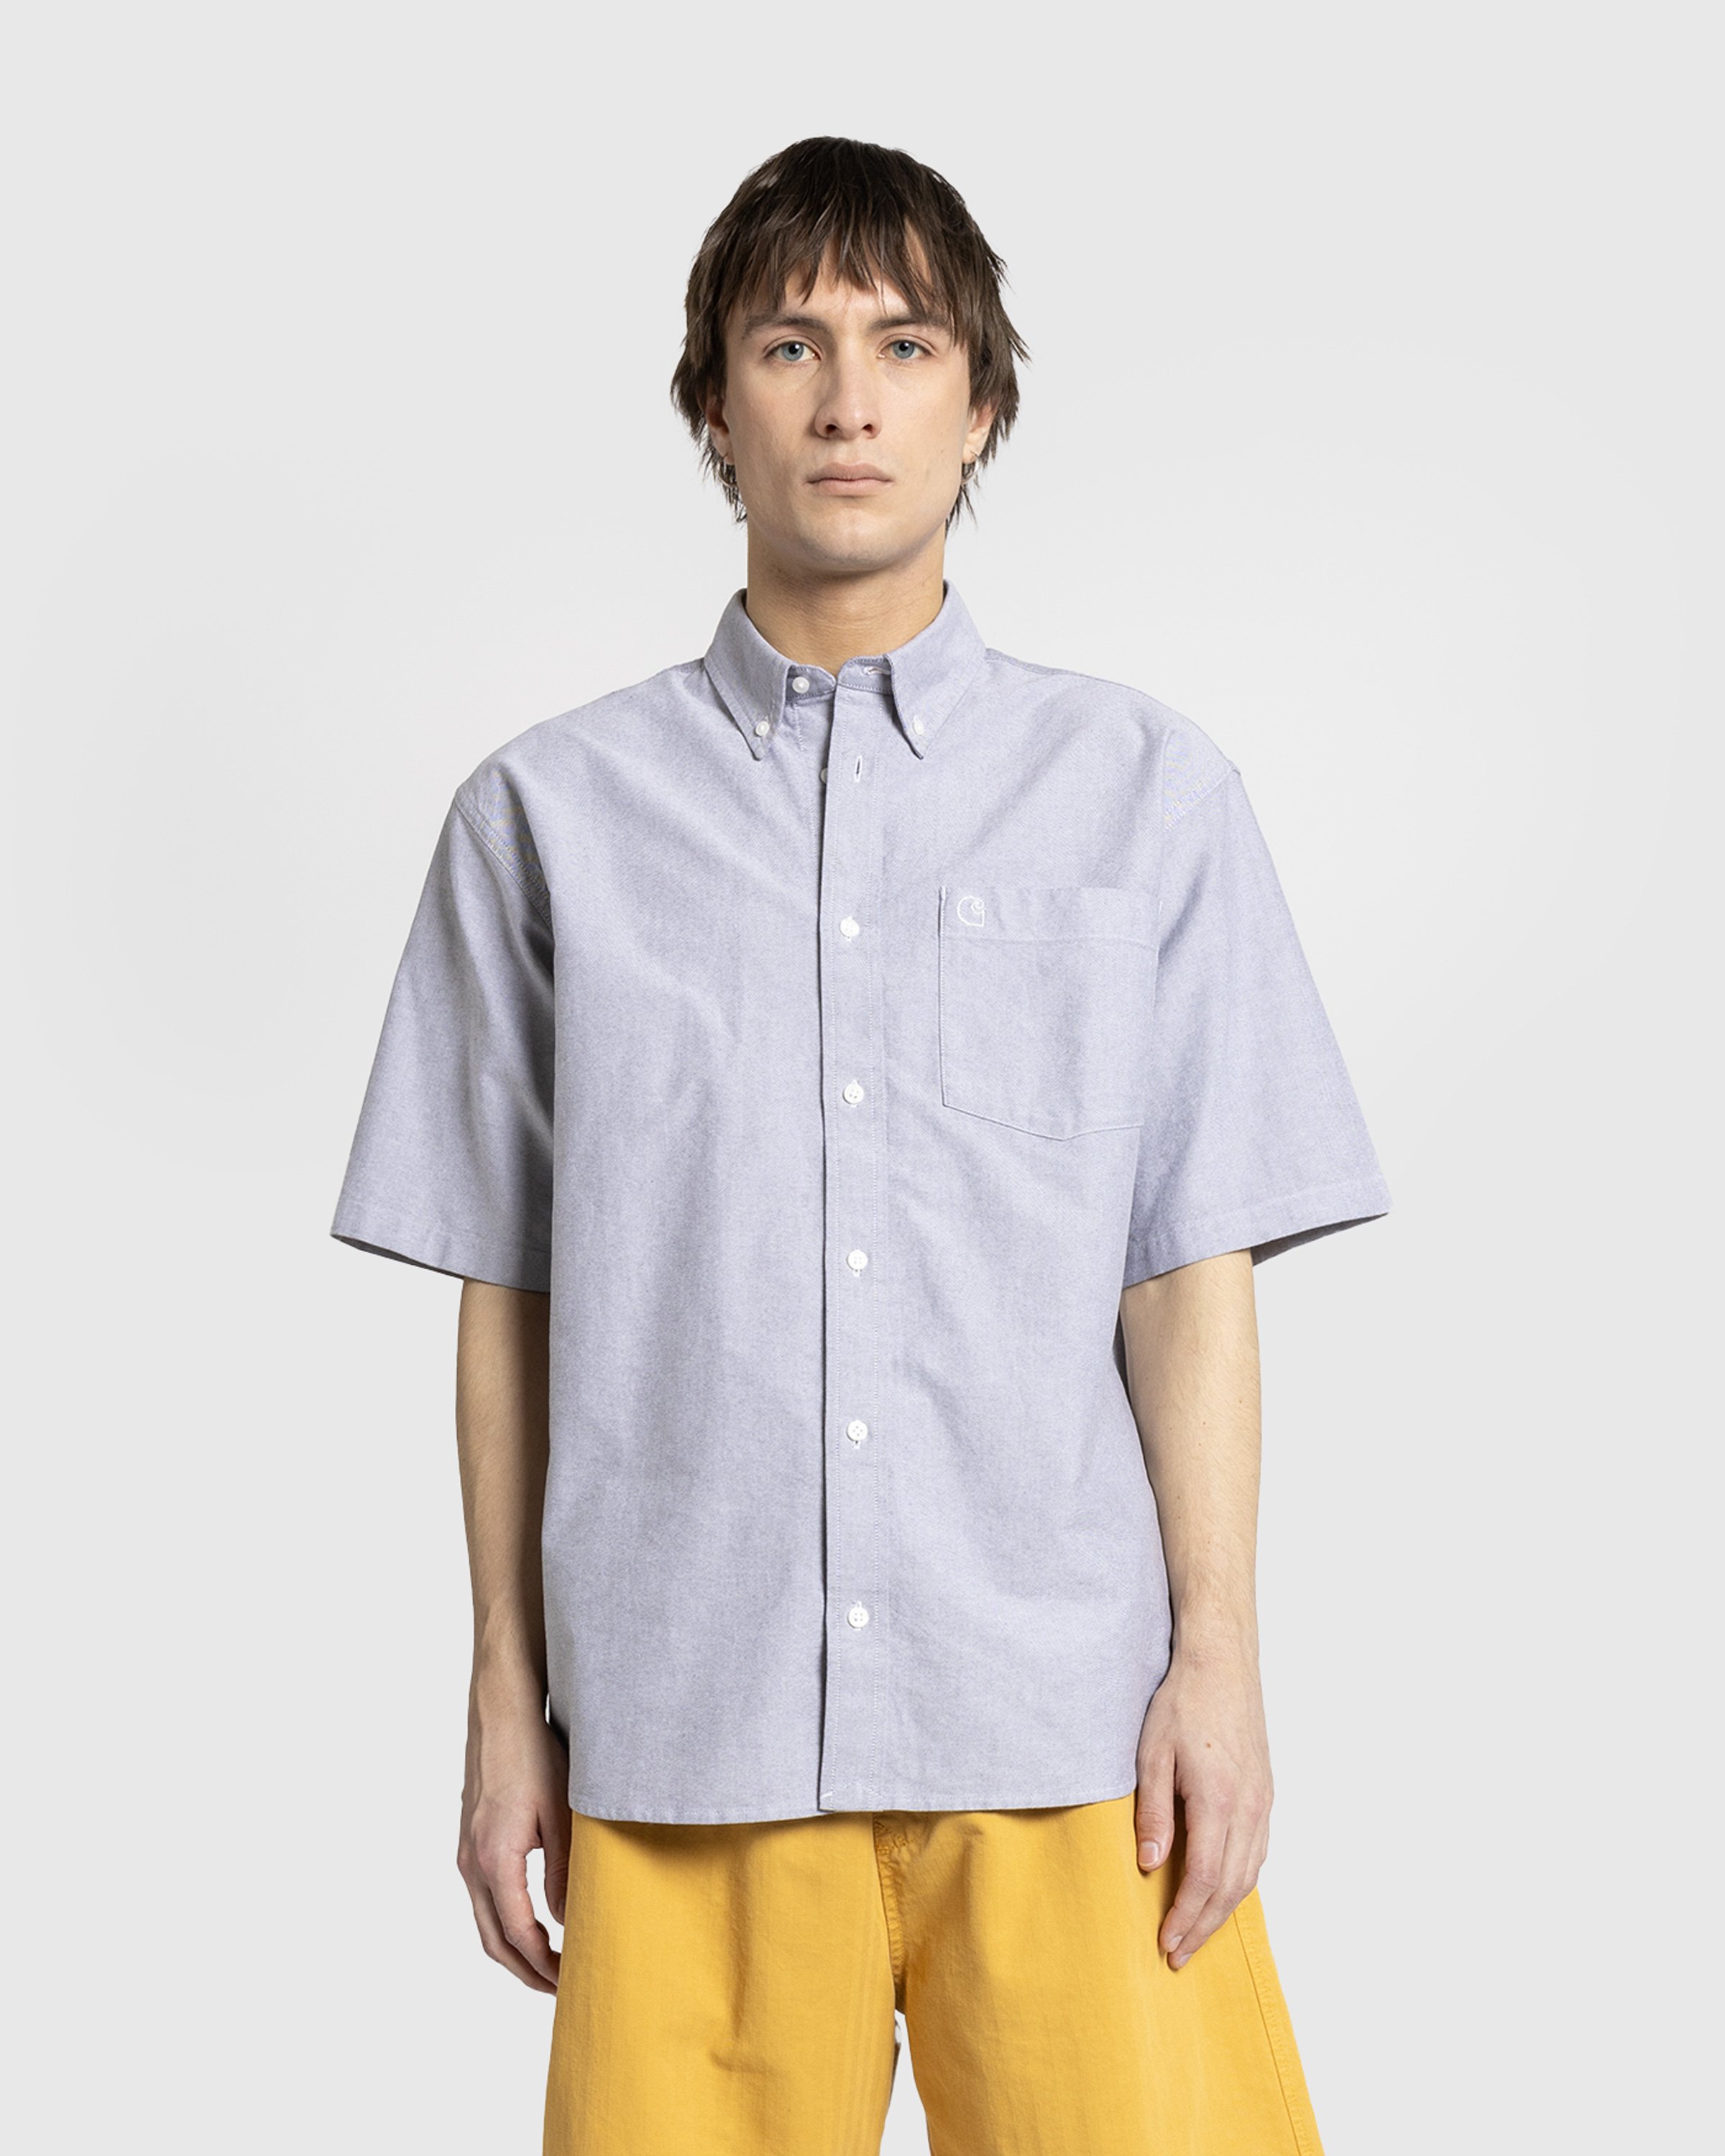 Carhartt WIP - S/S Braxton Shirt Charcoal / Wax - Clothing - Grey - Image 2